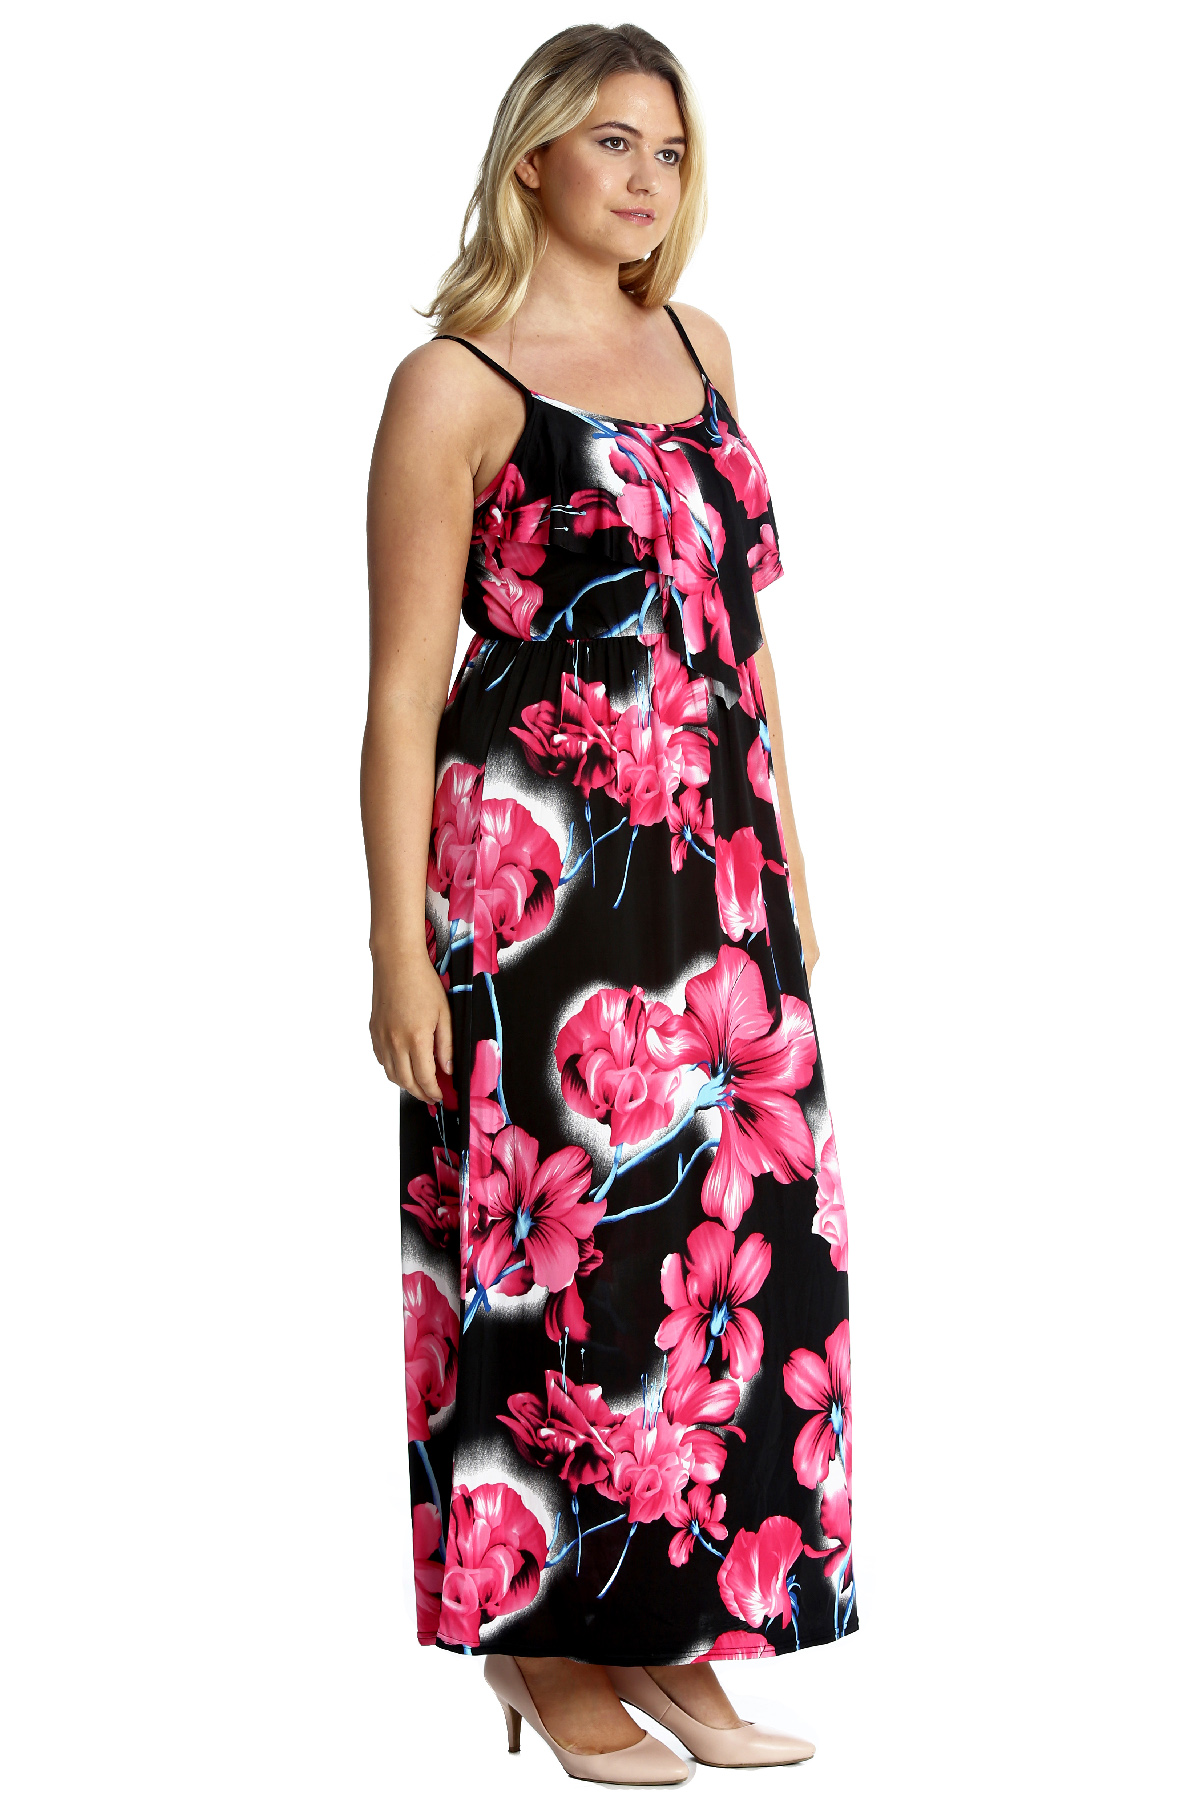 New Ladies Plus Size Maxi Dress Womens Tank Top Style Floral Print ...